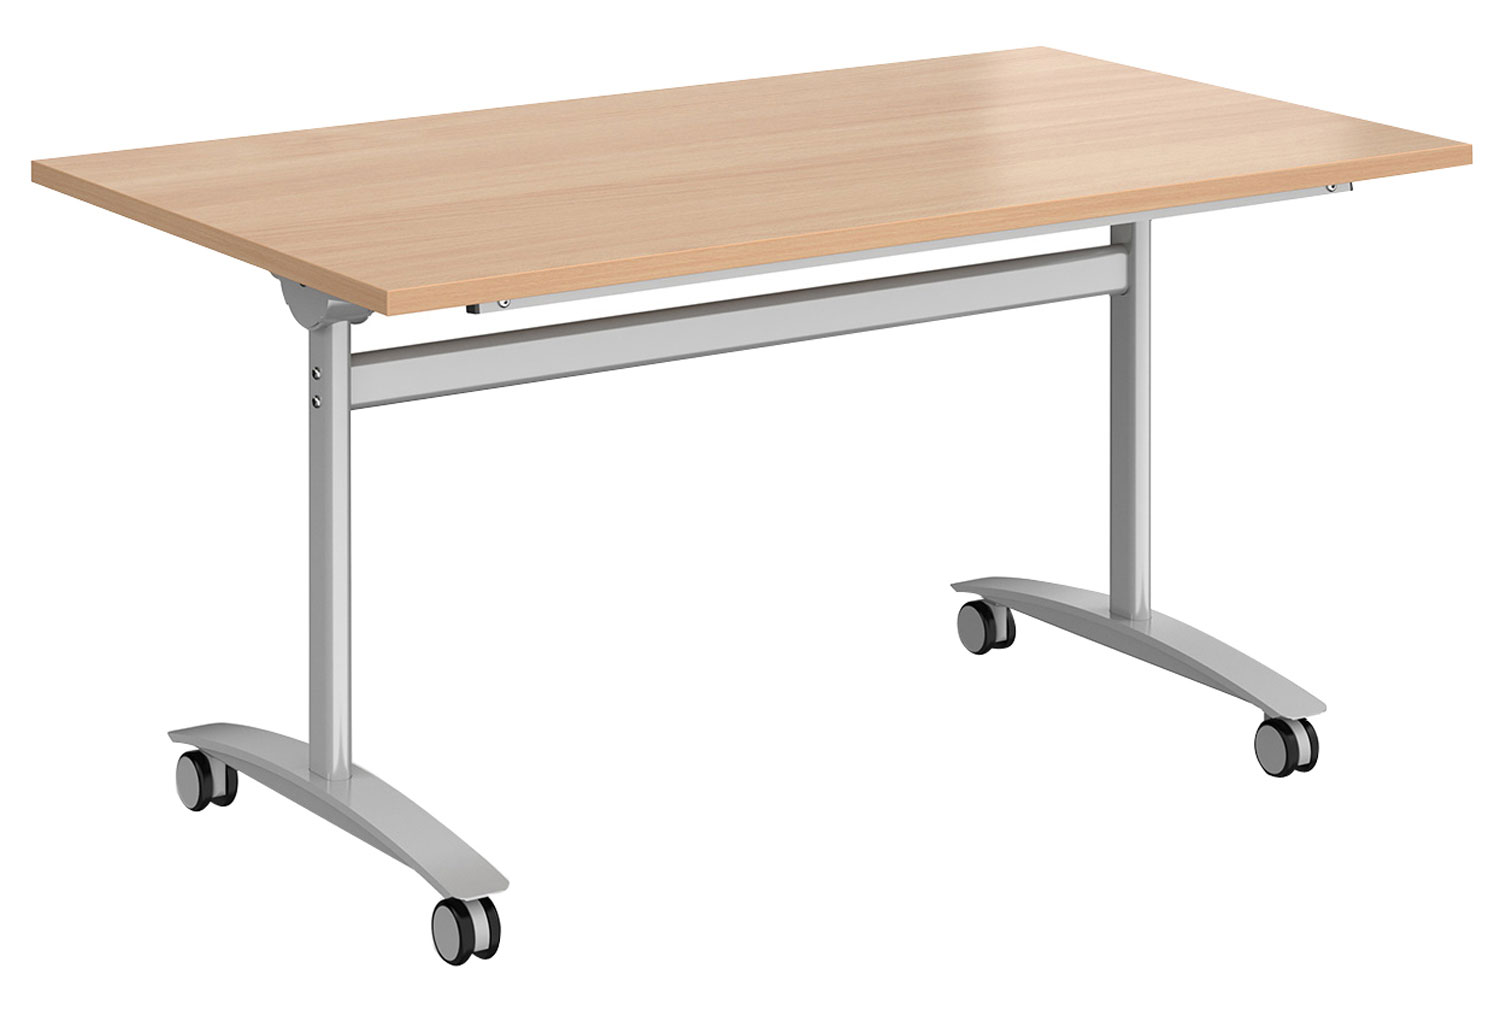 Larkin Rectangular Flip Top Table, 140wx80dx73h (cm), Beech